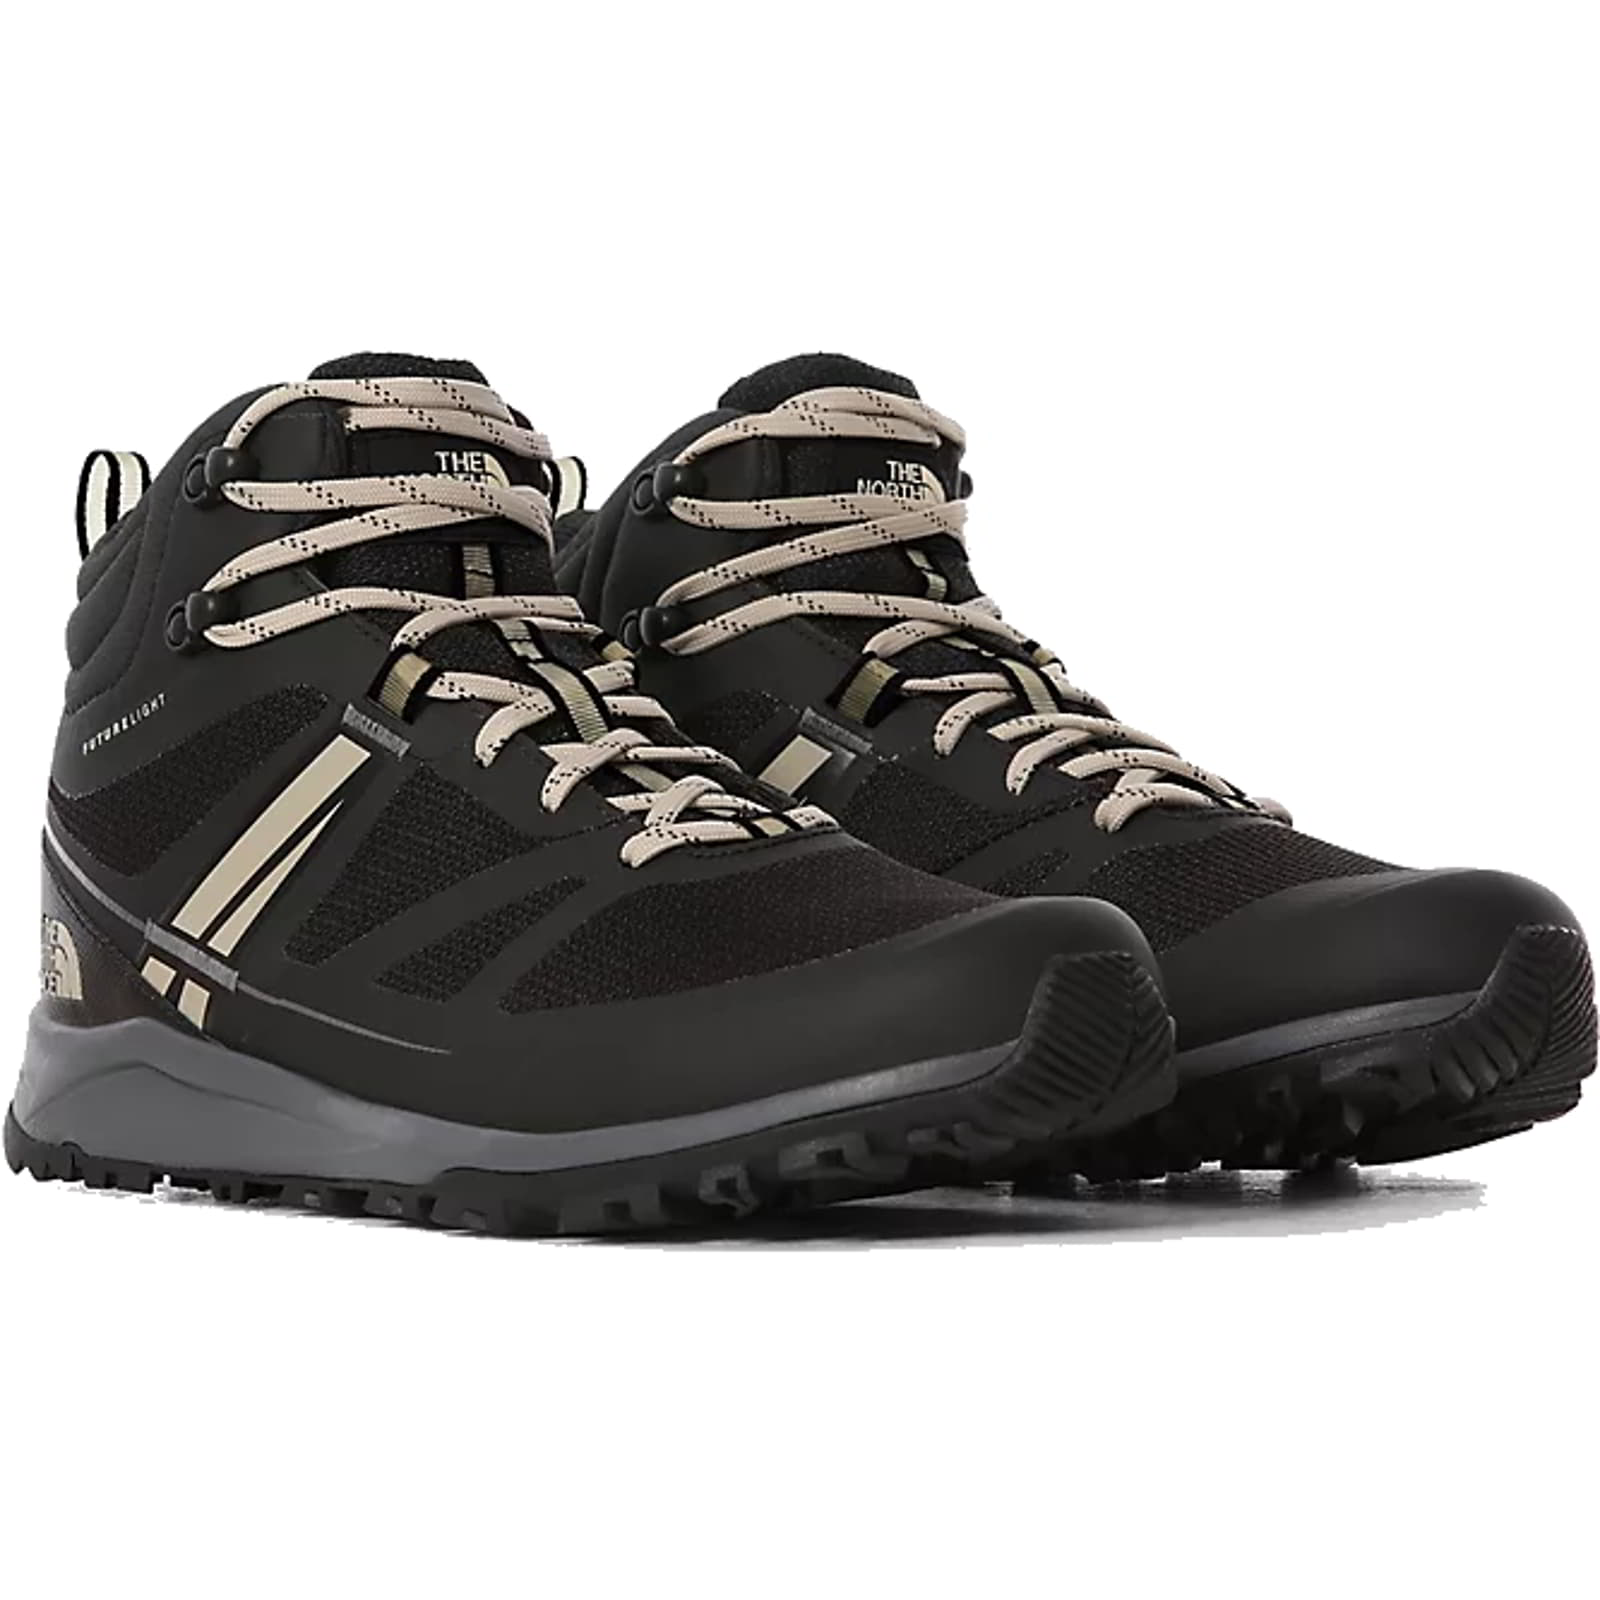 North Face Men's Litewave Mid Futurelight Waterproof Walking Ankle Boots - UK 9.5 / US 10.5